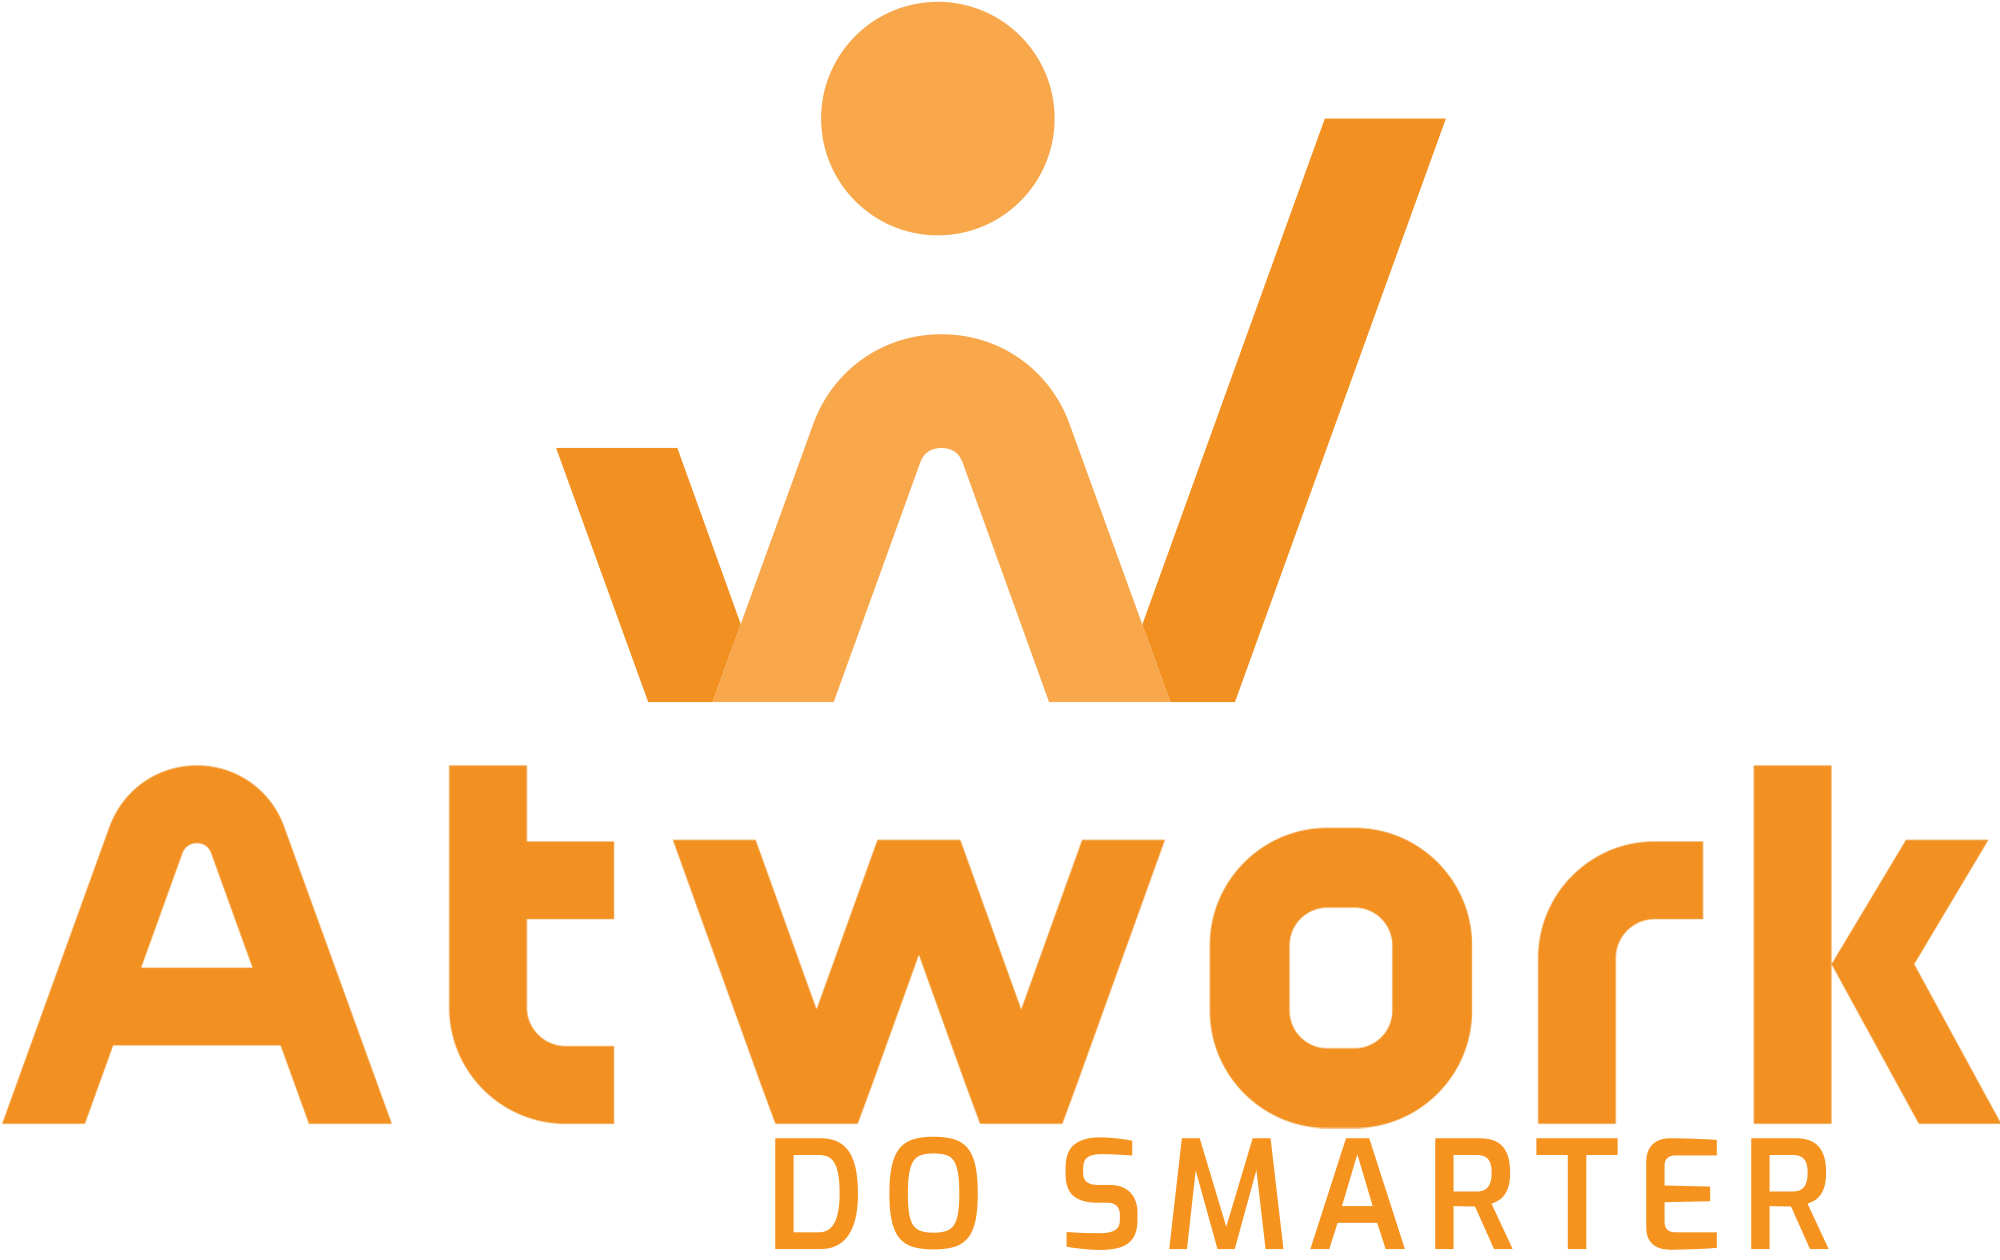 Atwork logo